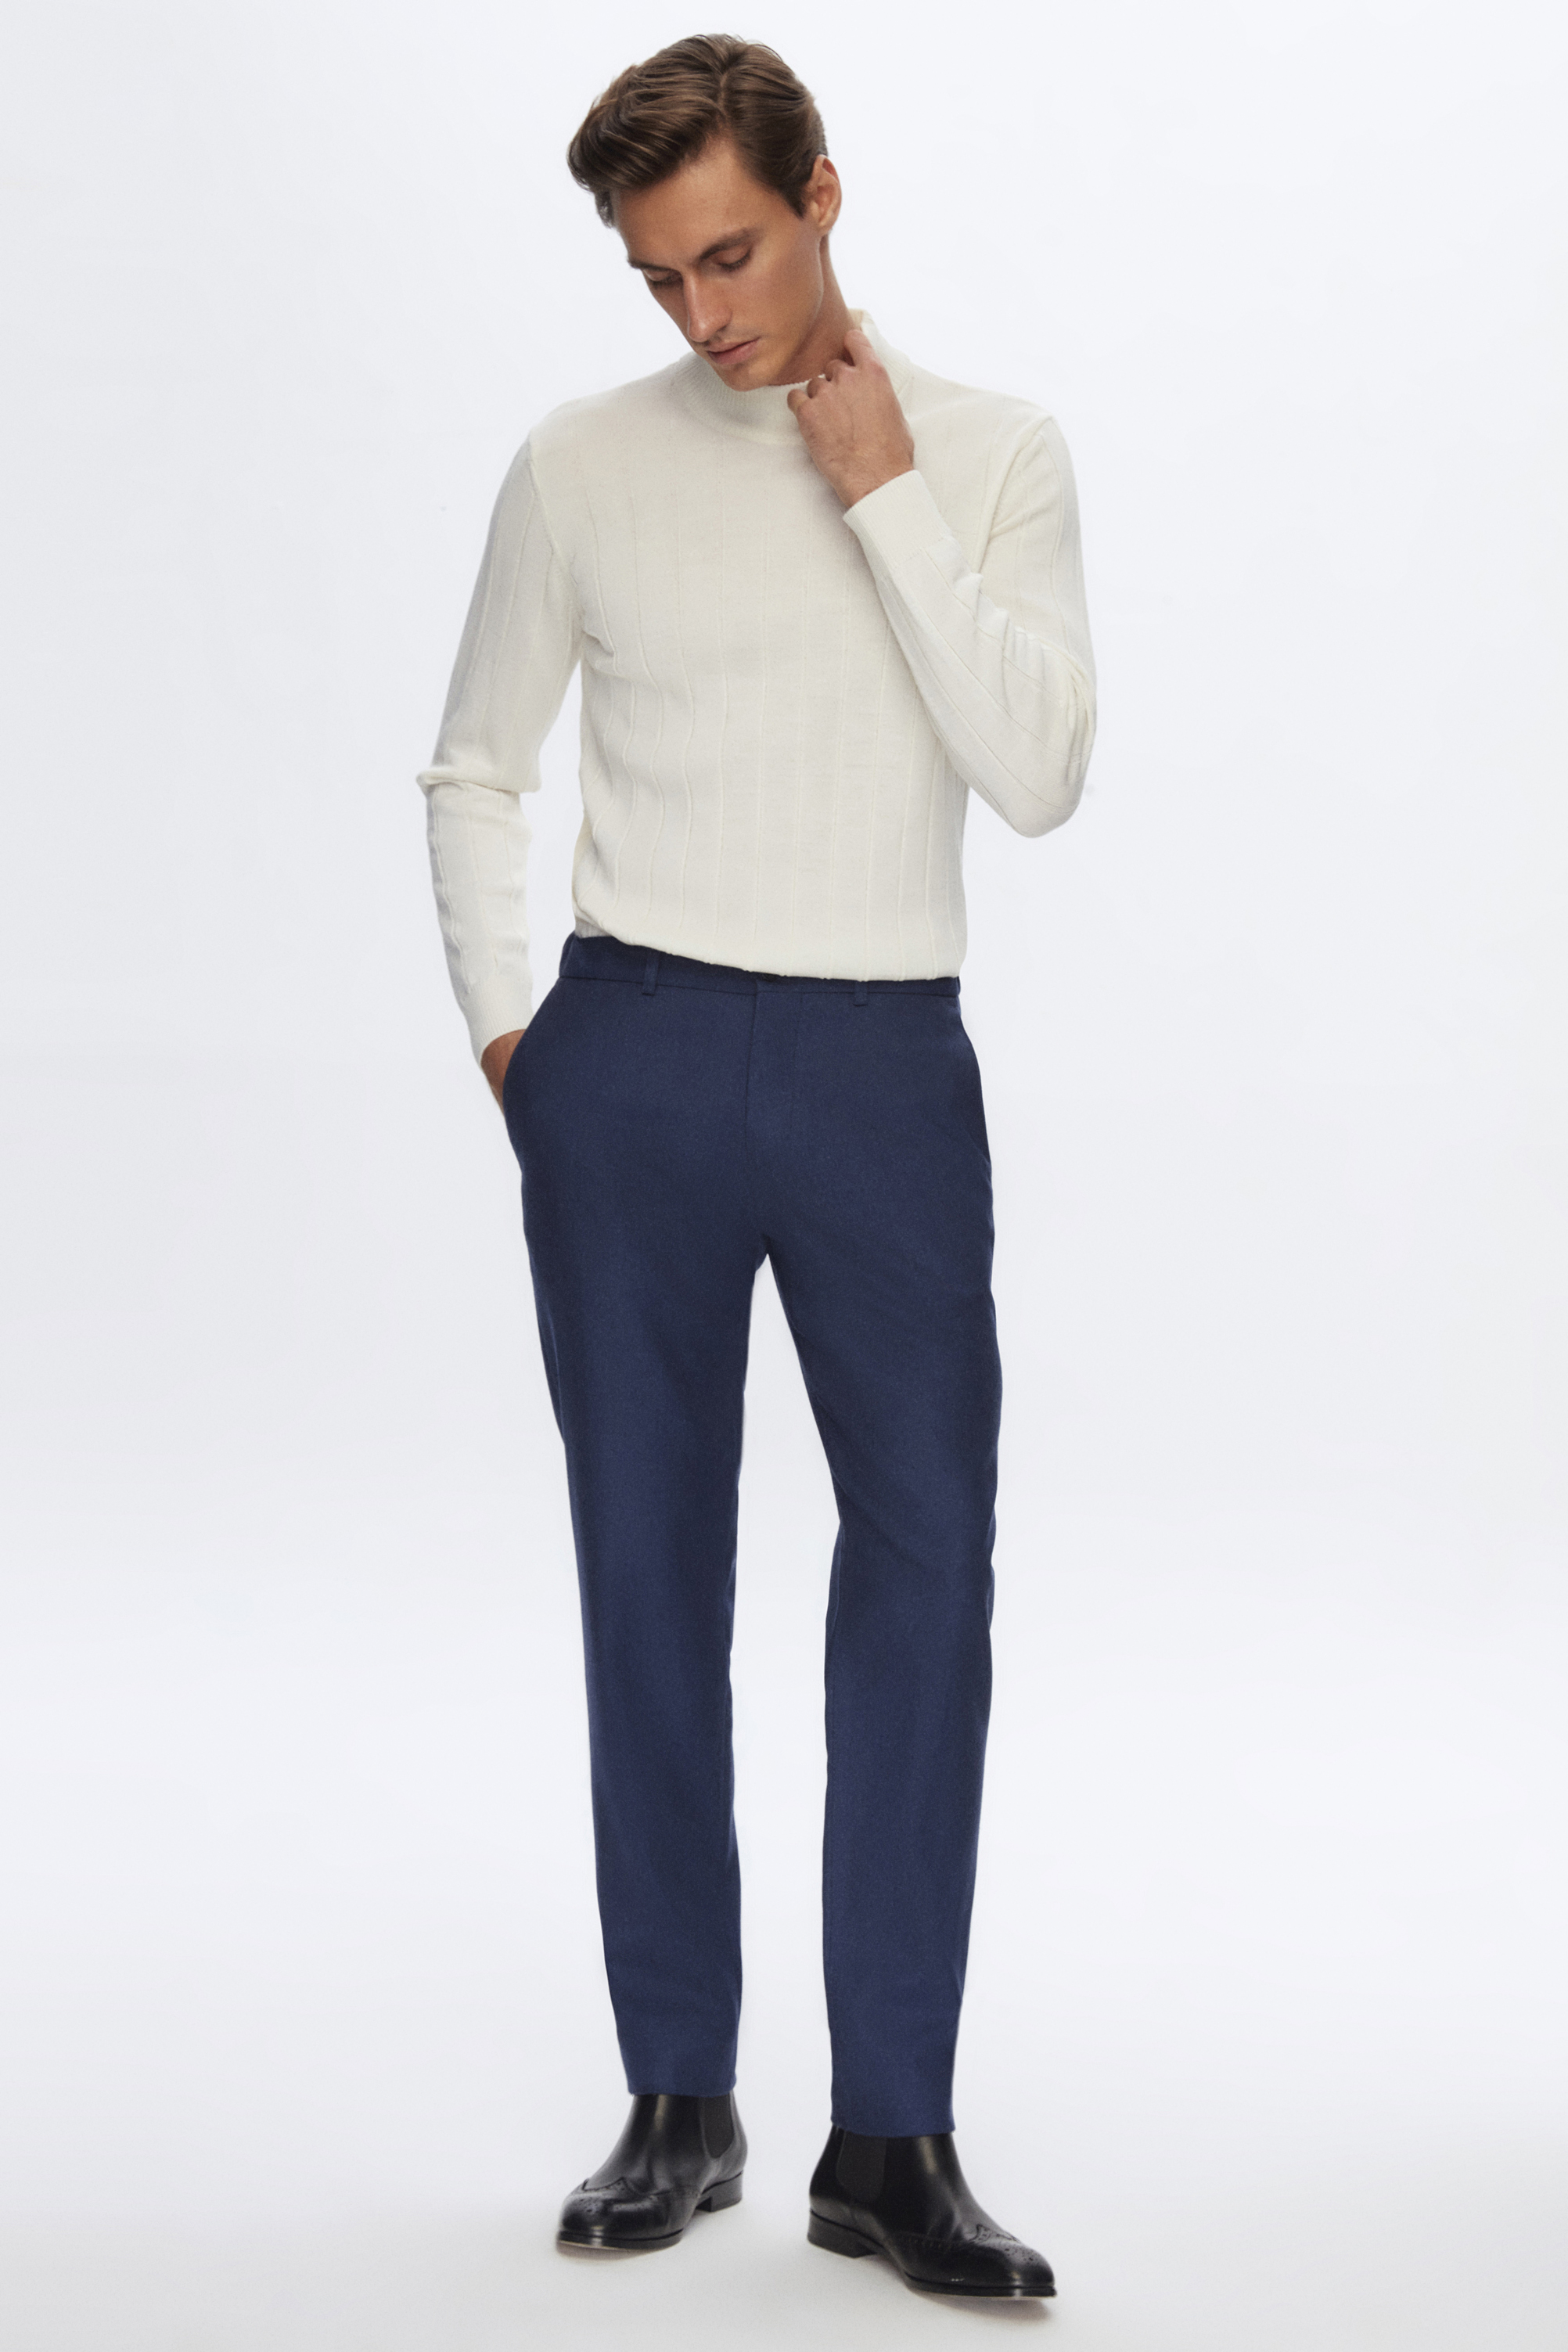 Damat Tween Damat Slim Fit Lacivert Düz %100 Yün Chino Pantolon. 4